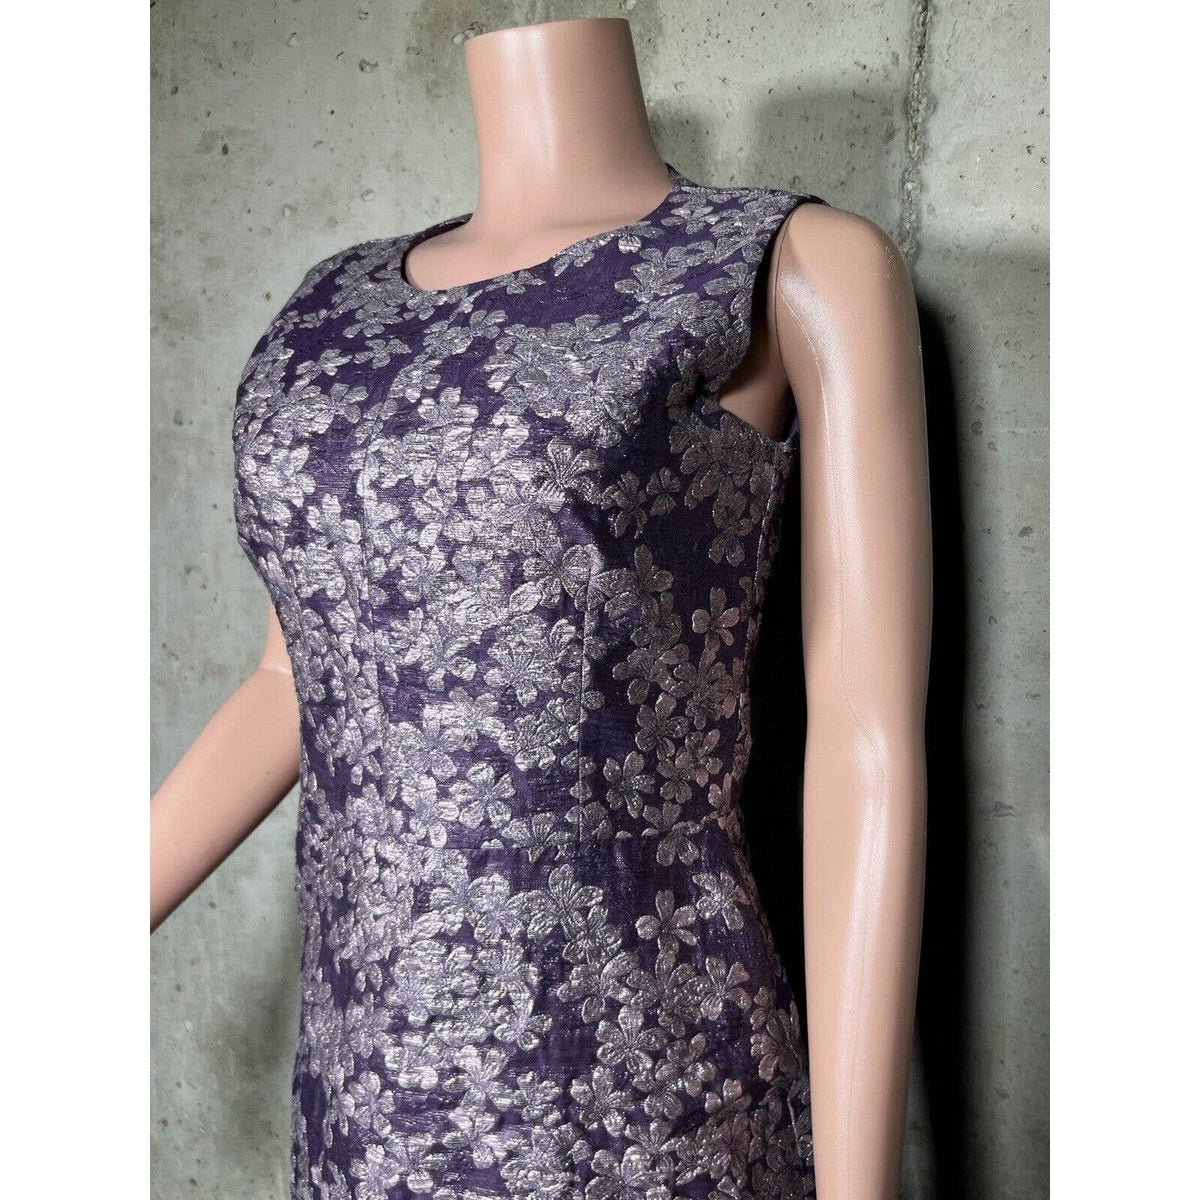 St John Black Label Purple Floral Sleeveless Dress Sz. 6